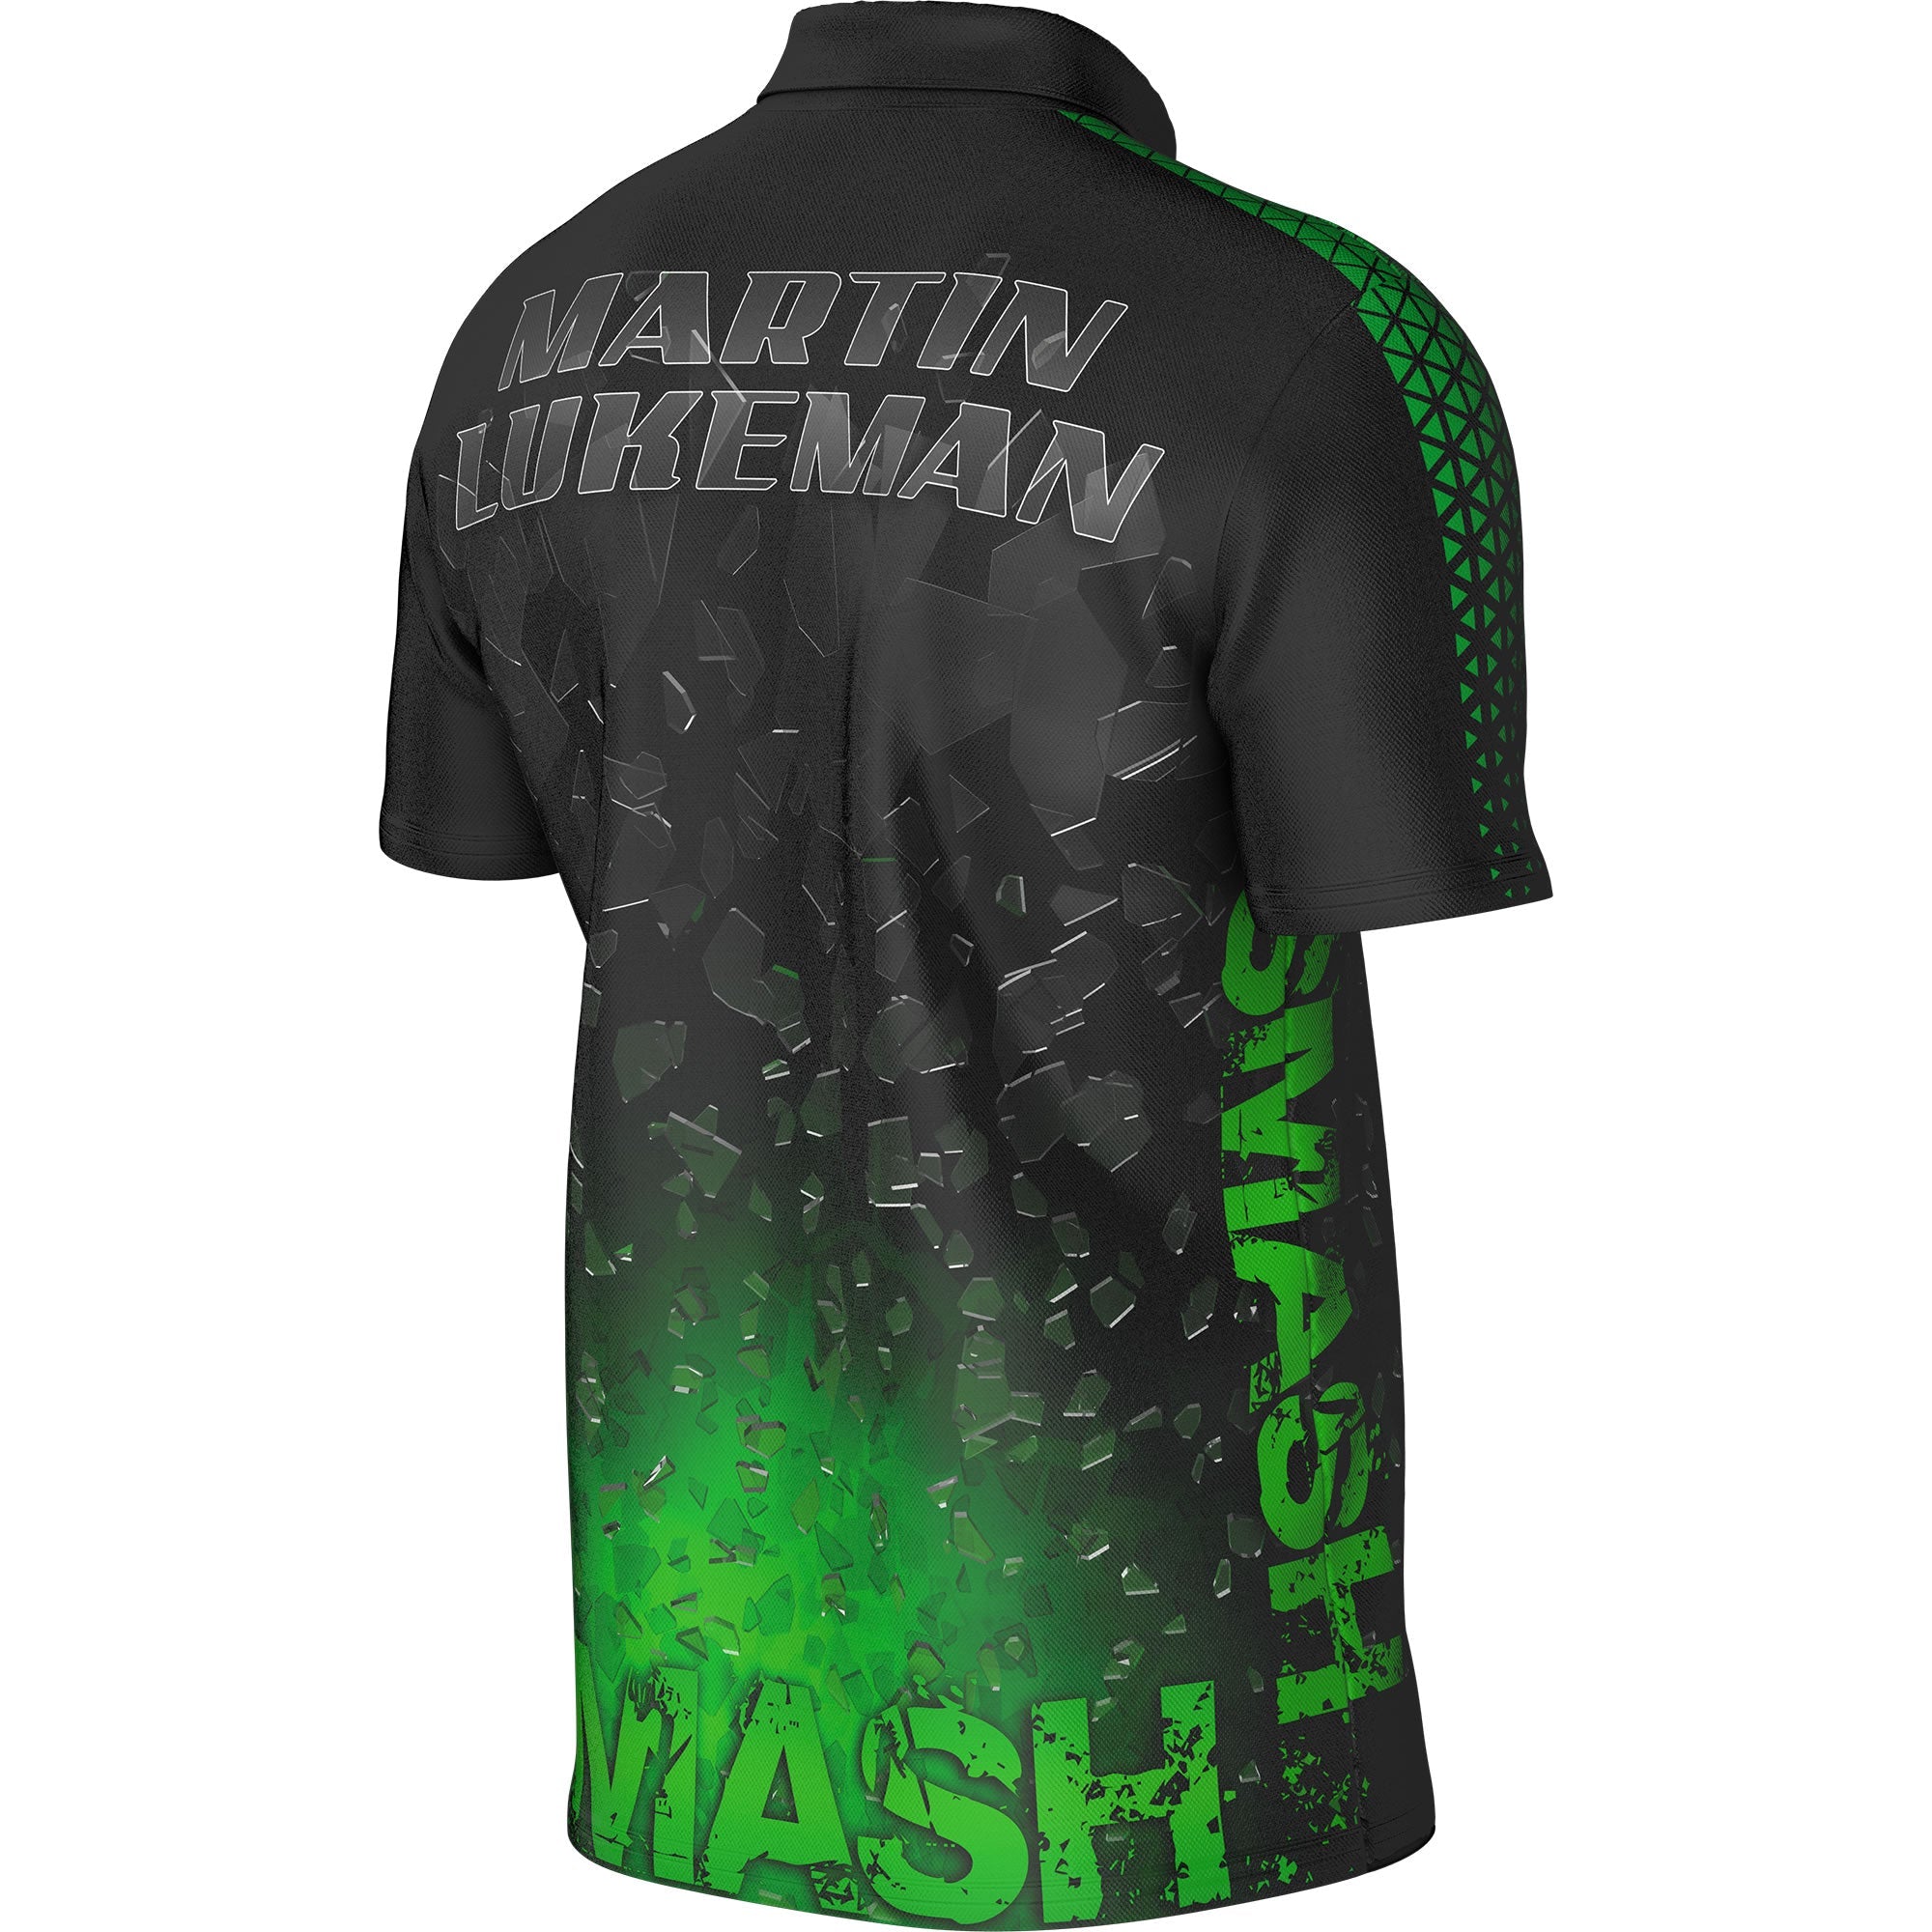 Mission Player Dart Shirt - Martin Lukeman - Smash